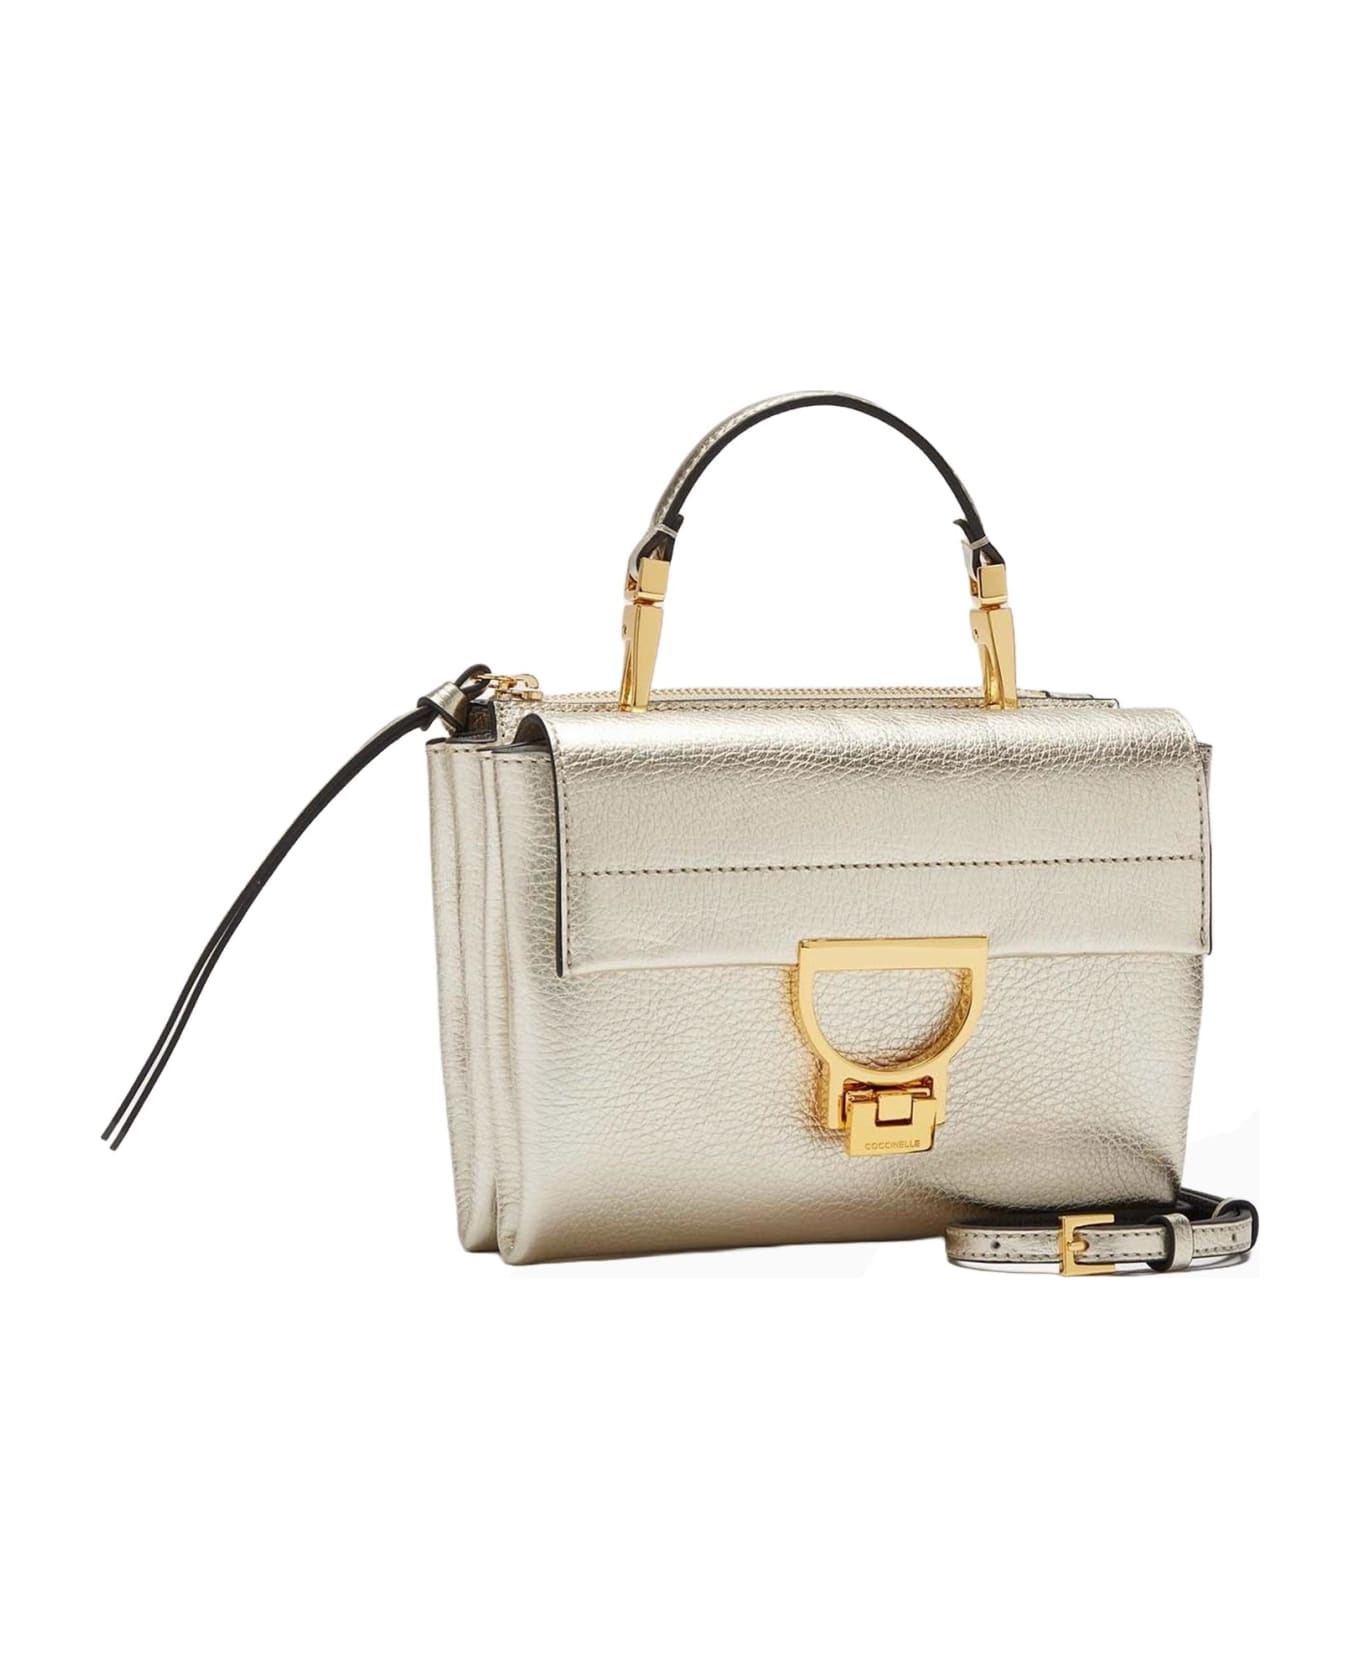 Coccinelle Arlettis Handbag - Pale gold トートバッグ